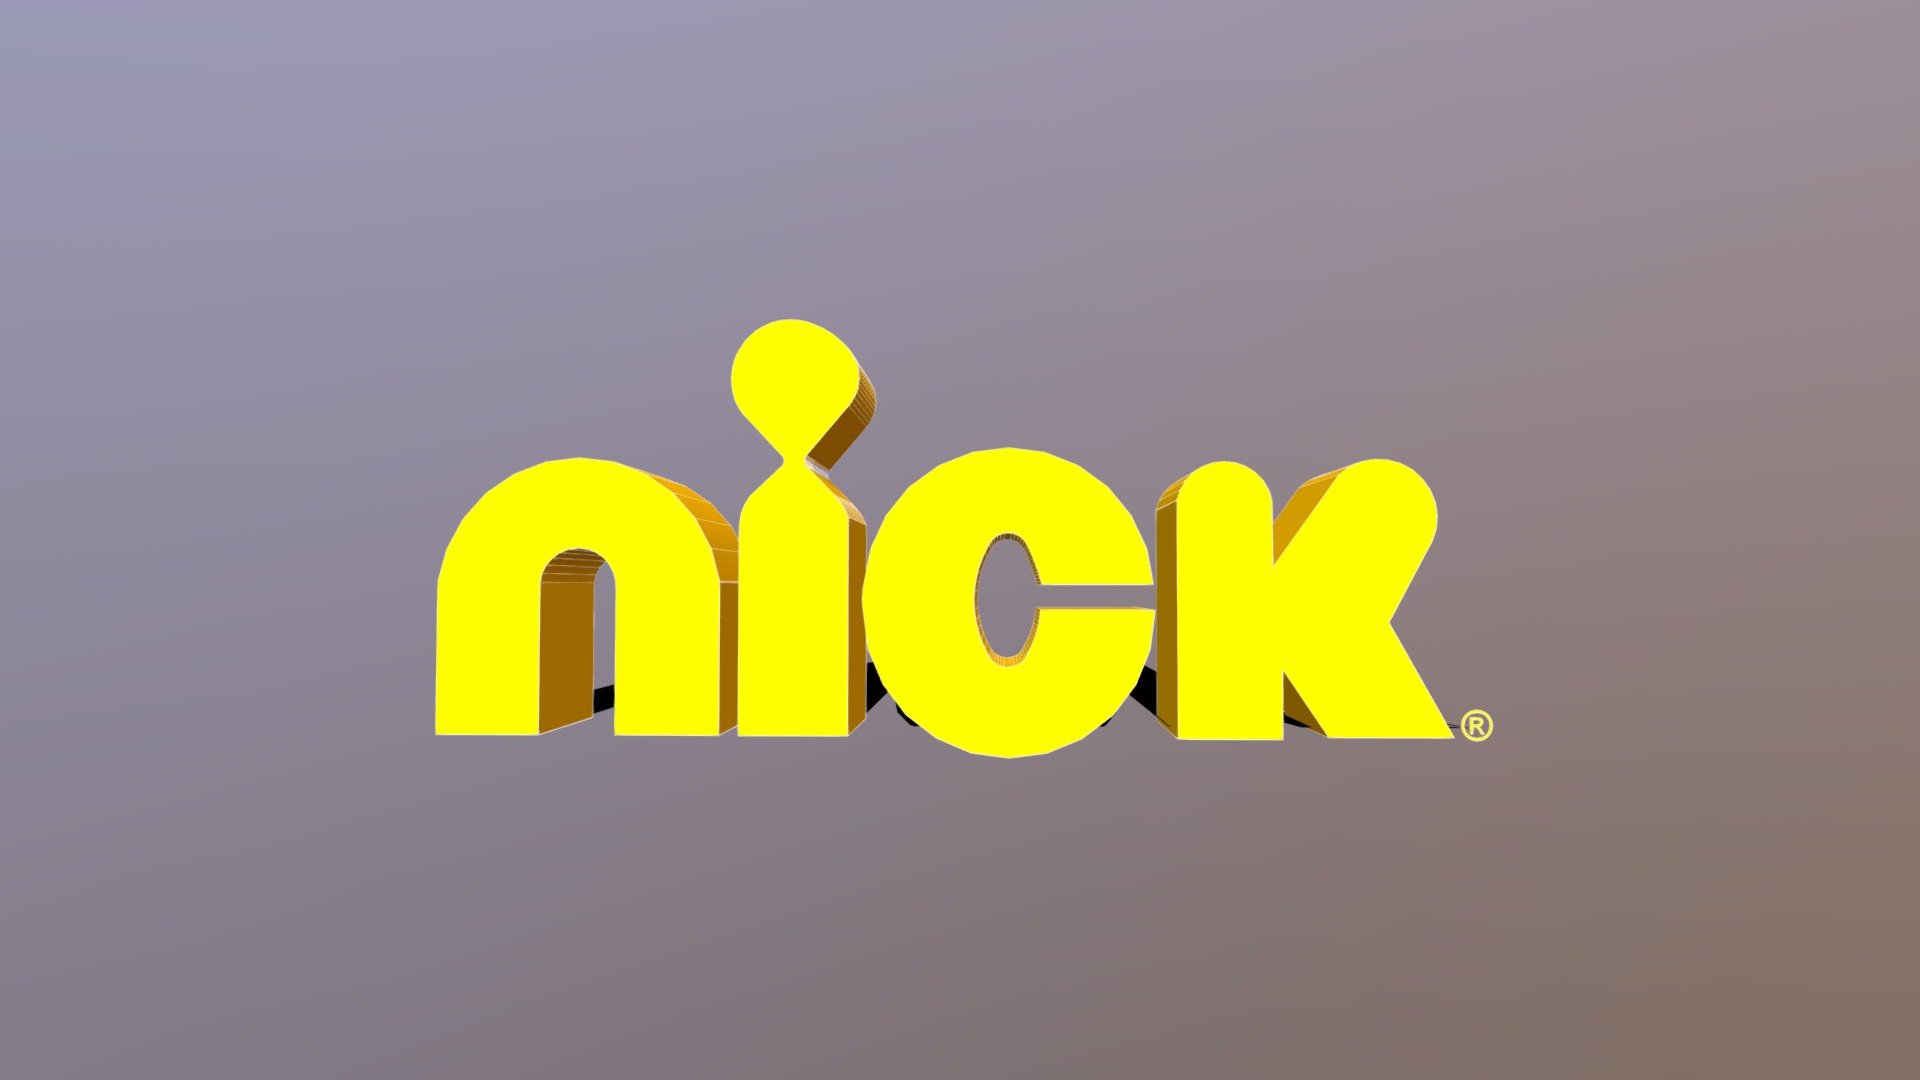 Nickelodeon Logo 3d